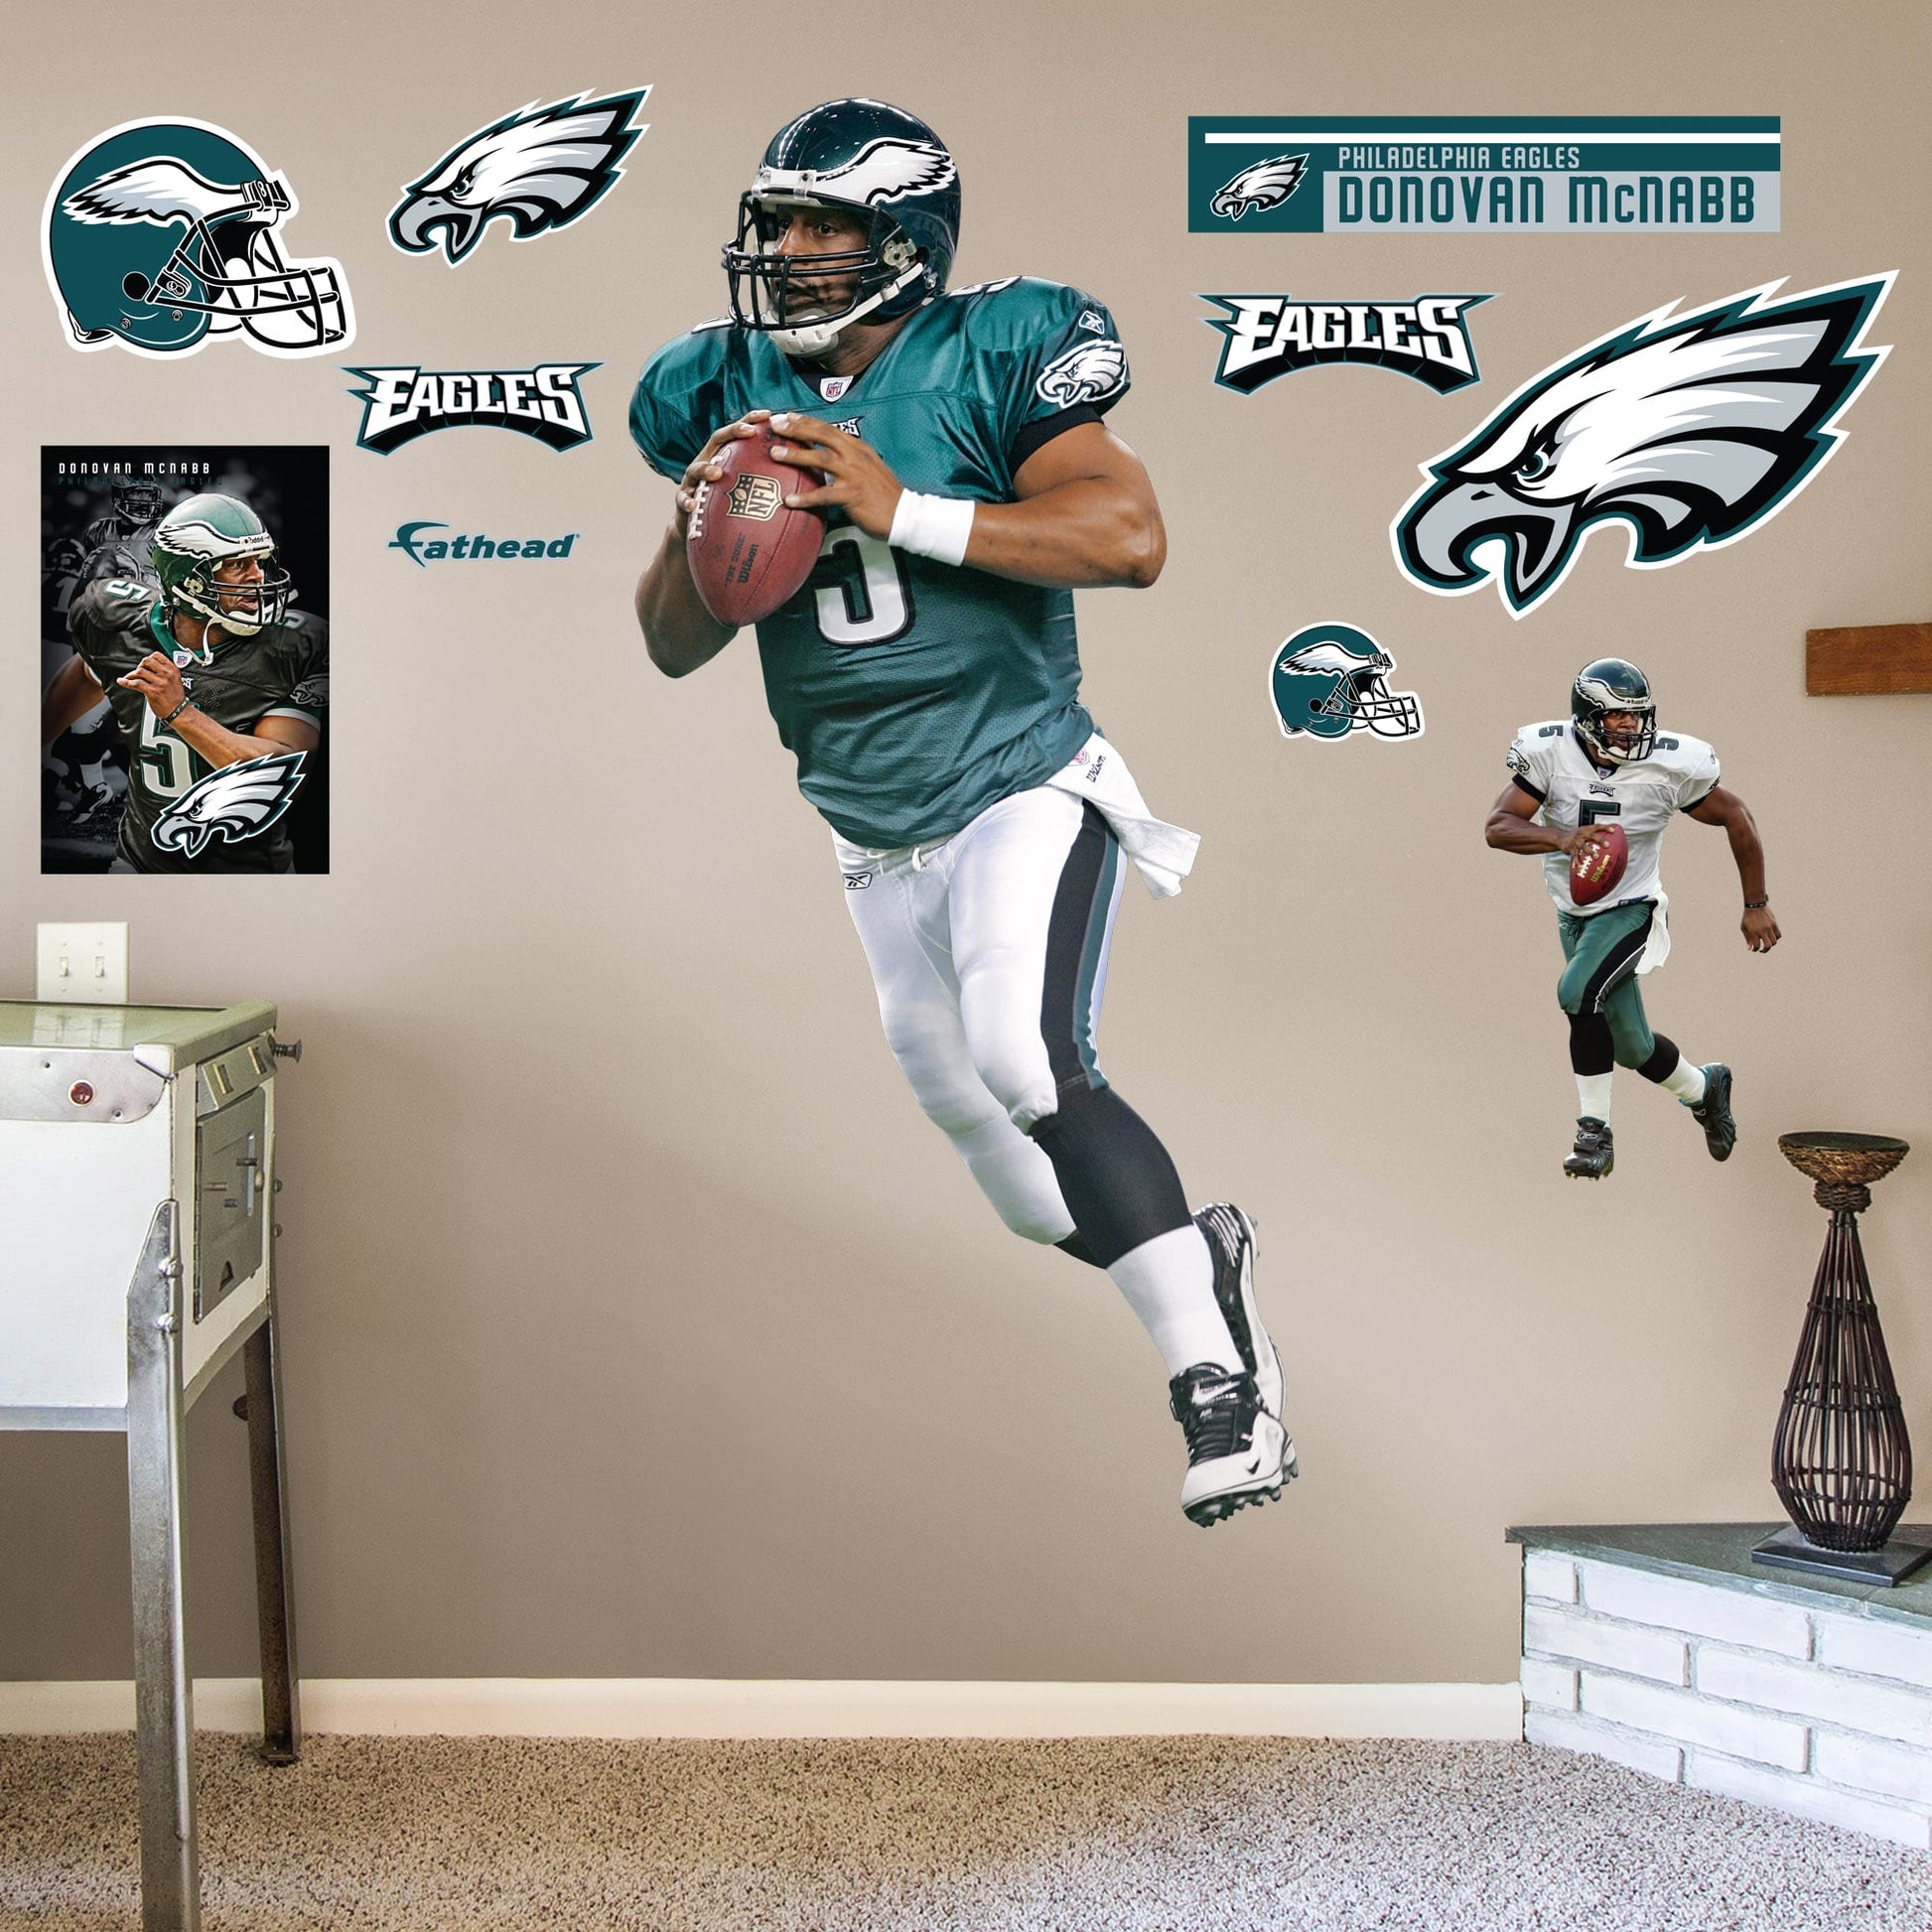 Donovan McNabb for Philadelphia Eagles: Legend - NFL Removable Wall Decal Large